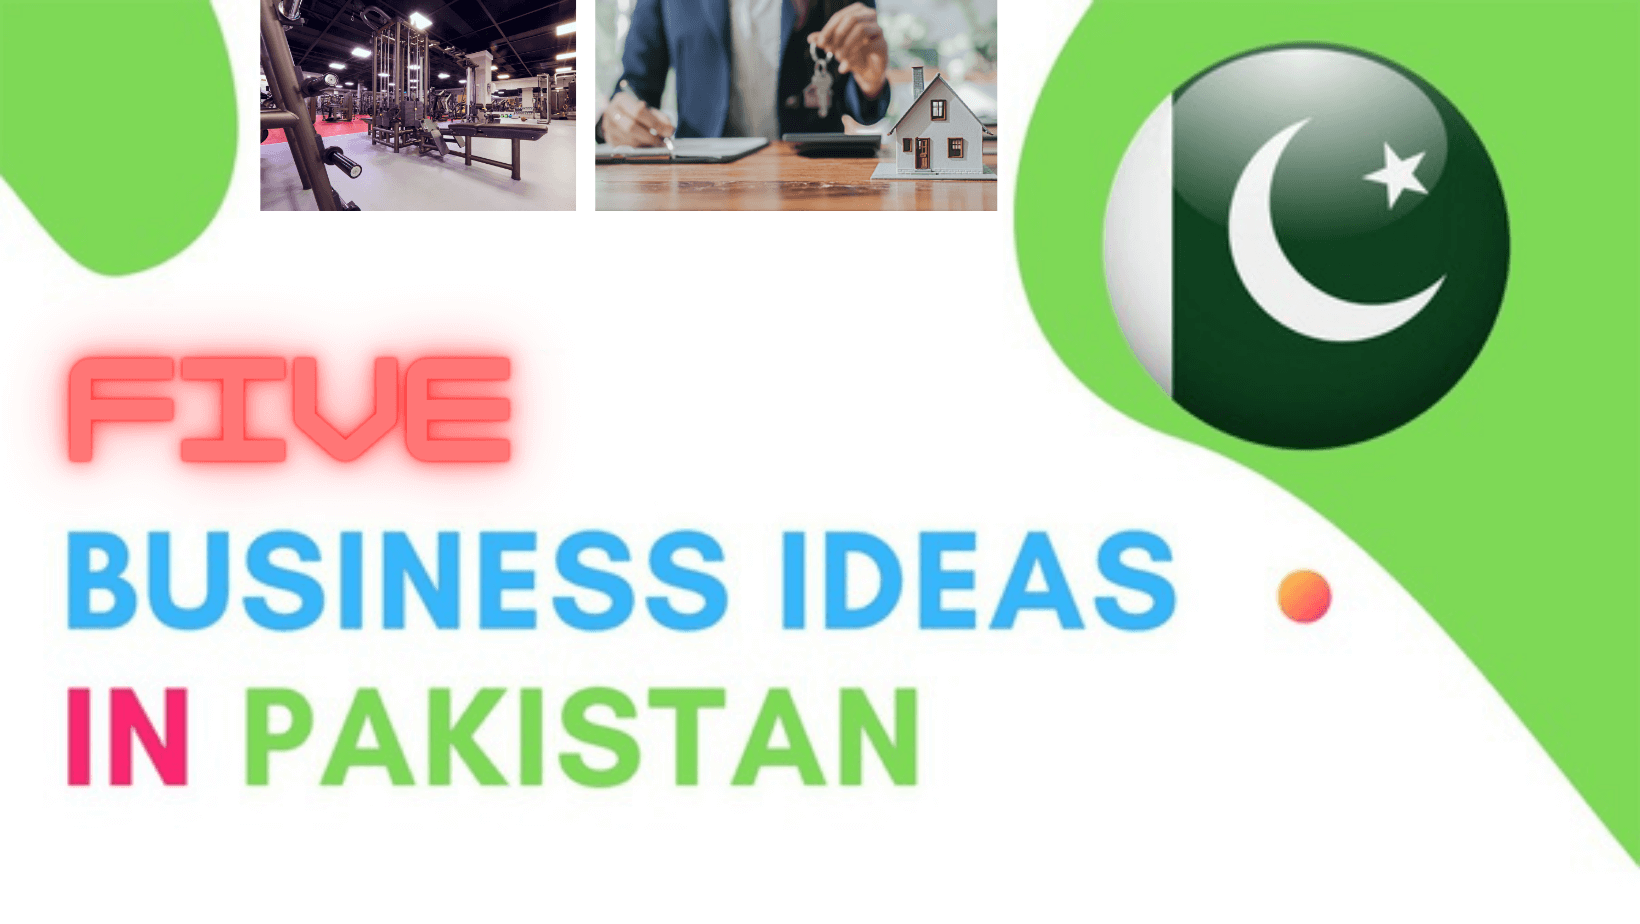 business ideas in pakistan with 2 million